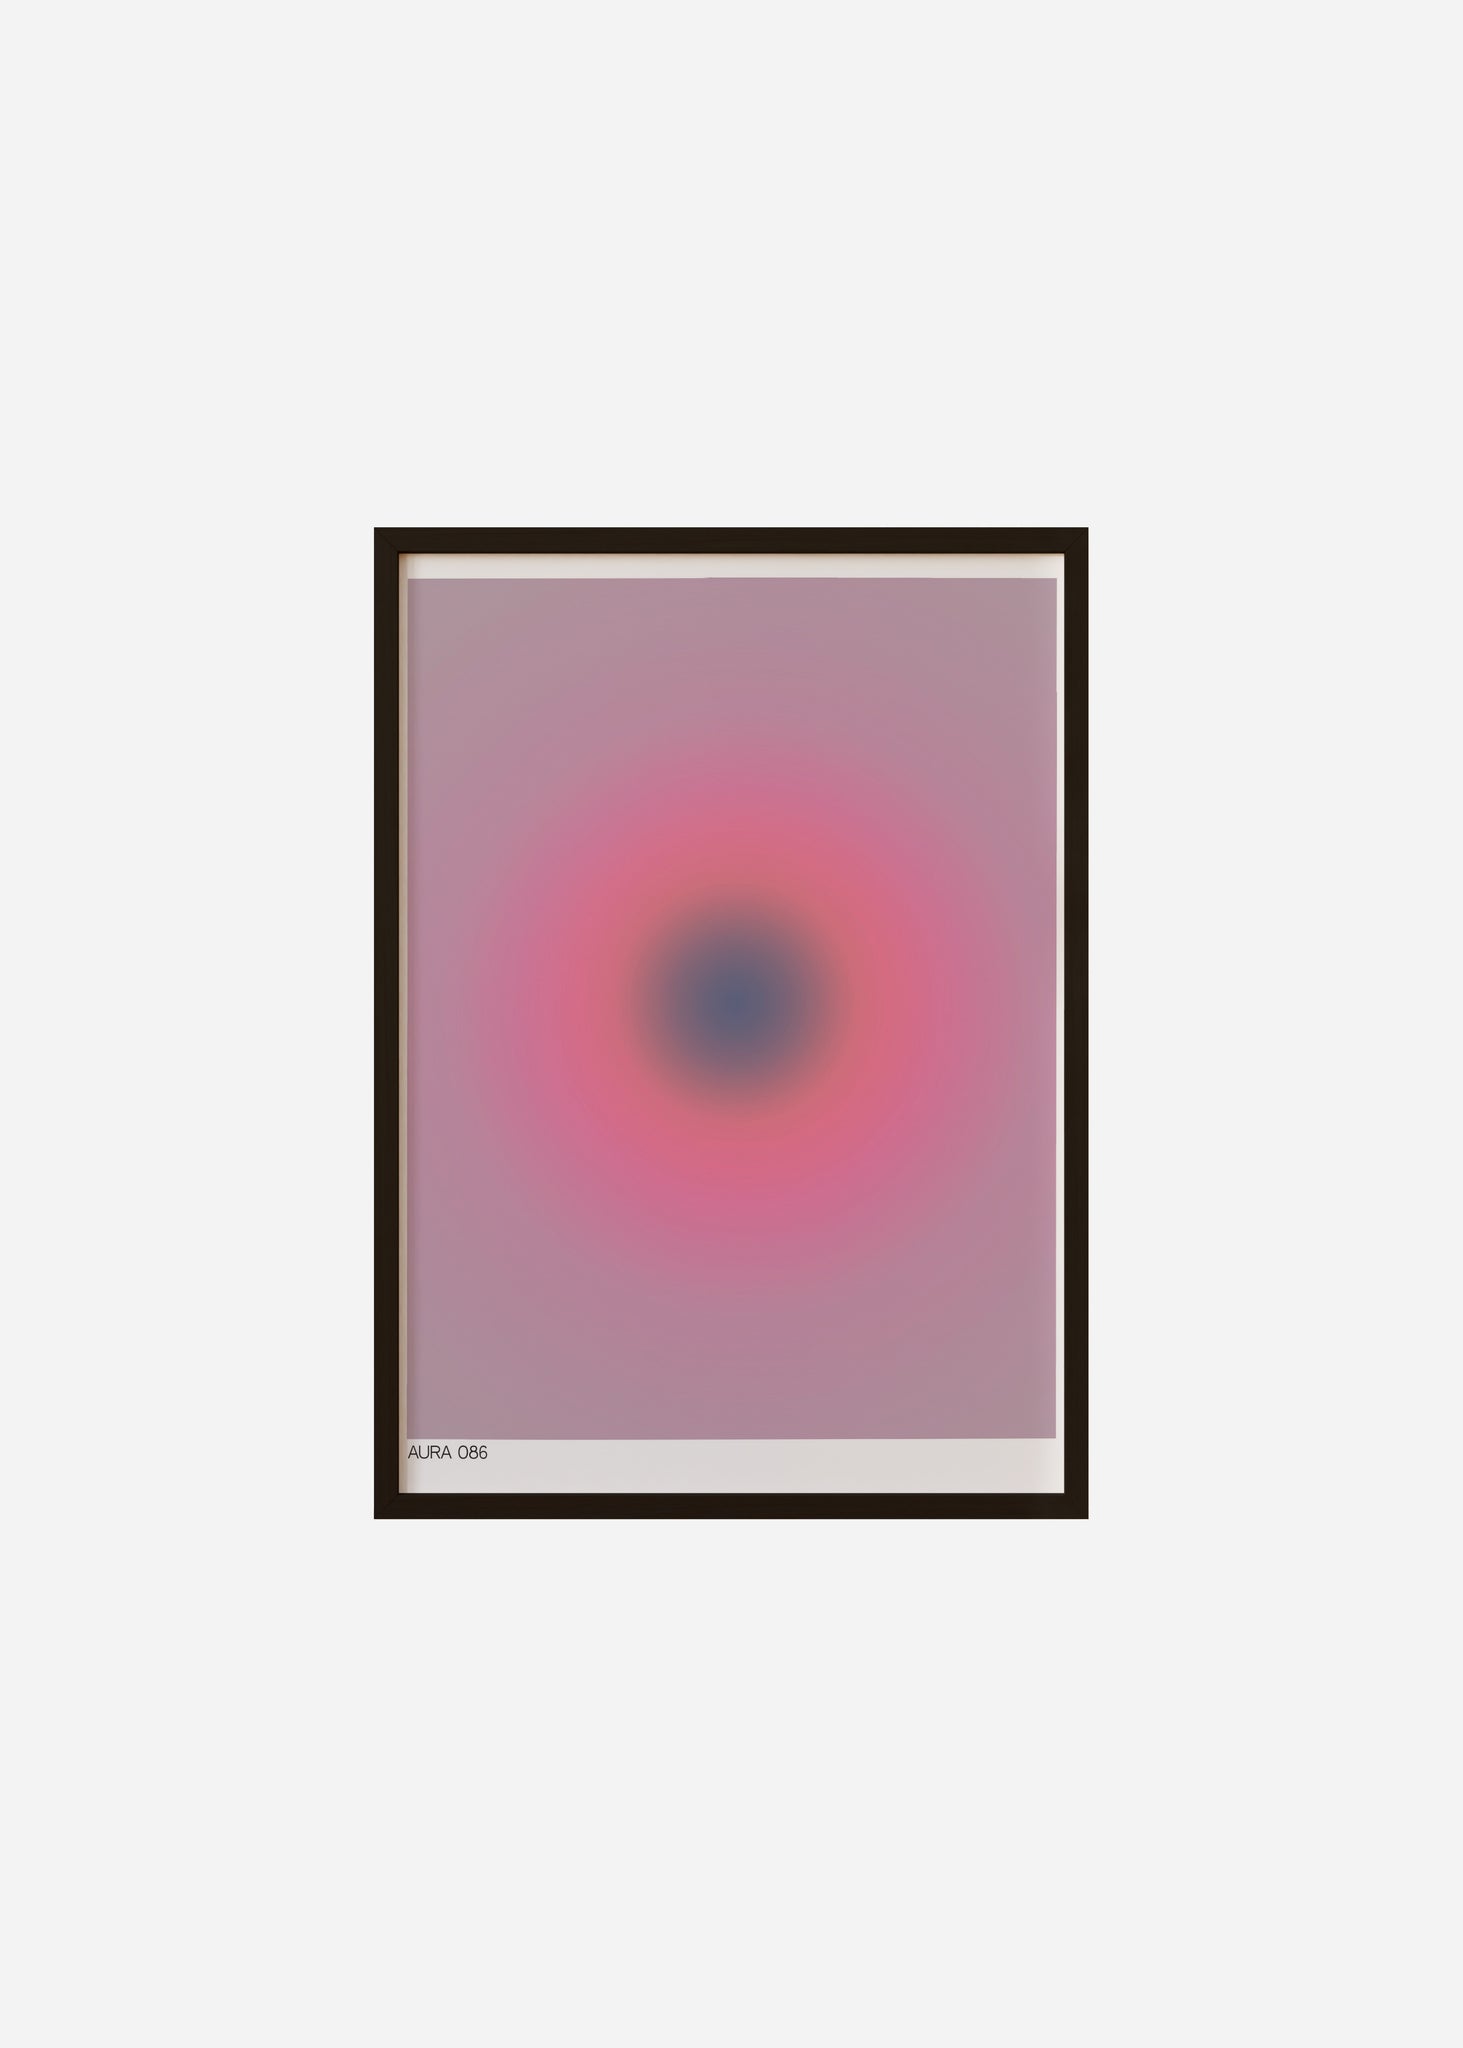 aura 086 Framed Print